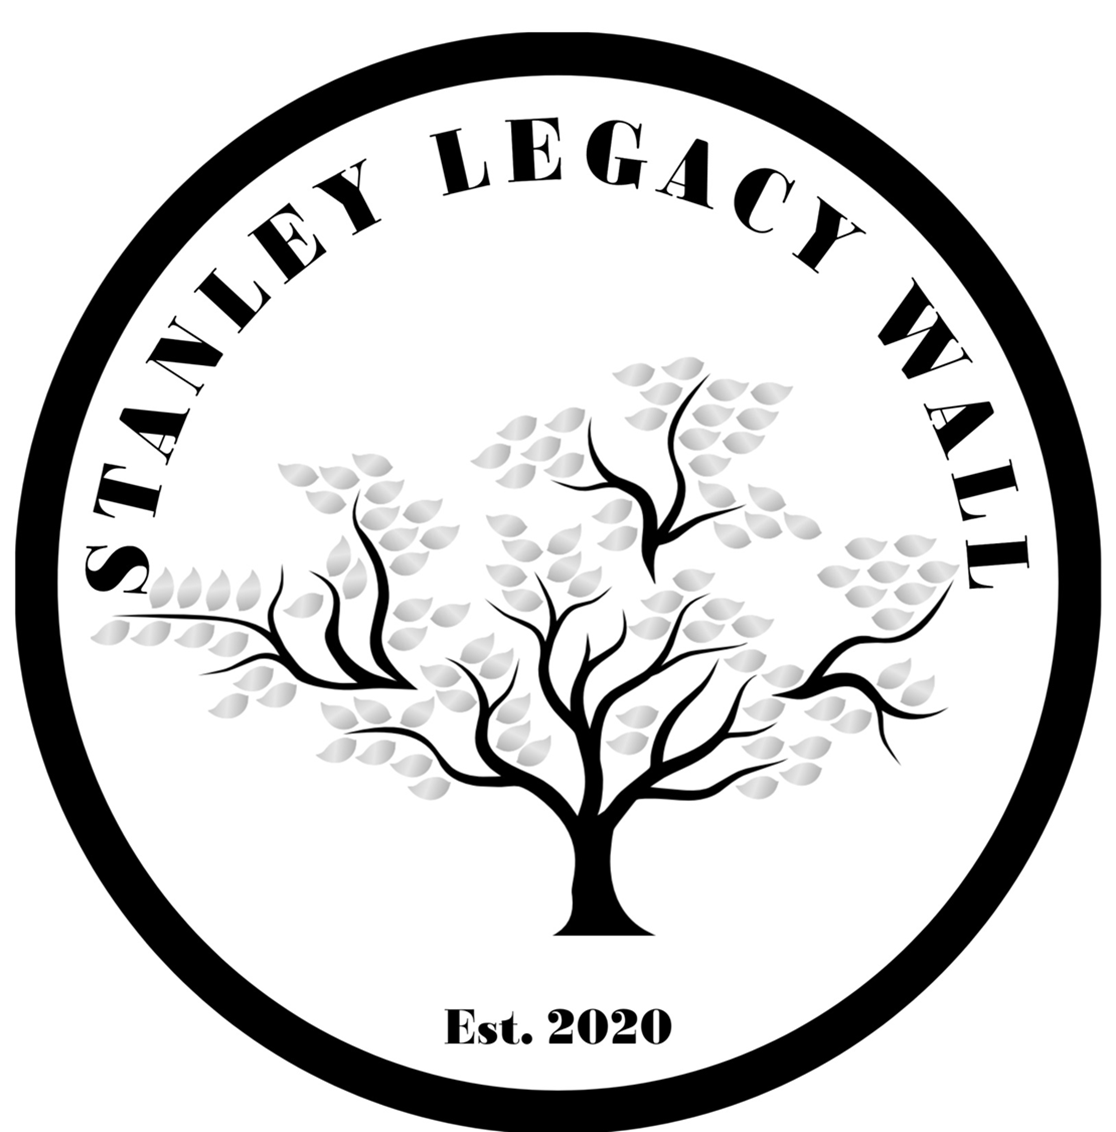 Stanley Legacy Wall Logo